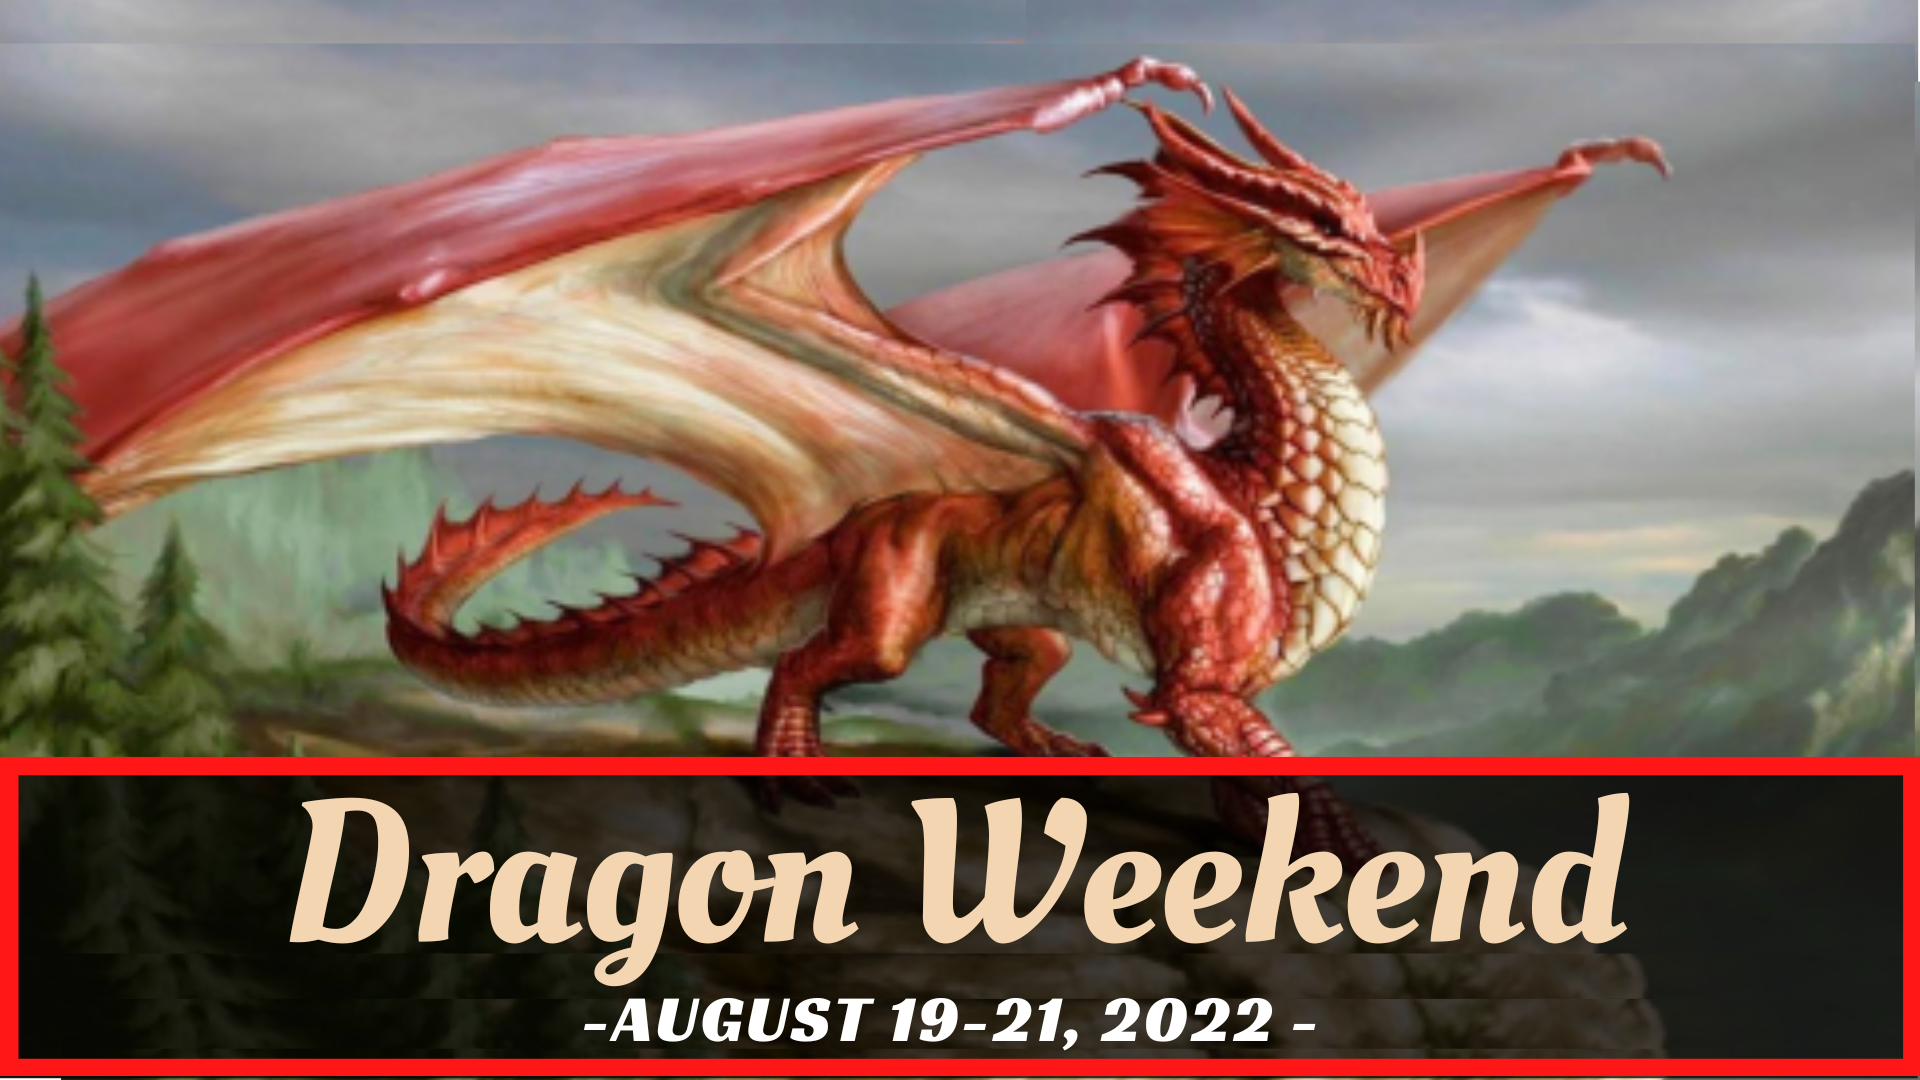 Dragon Quest Weekend 2022